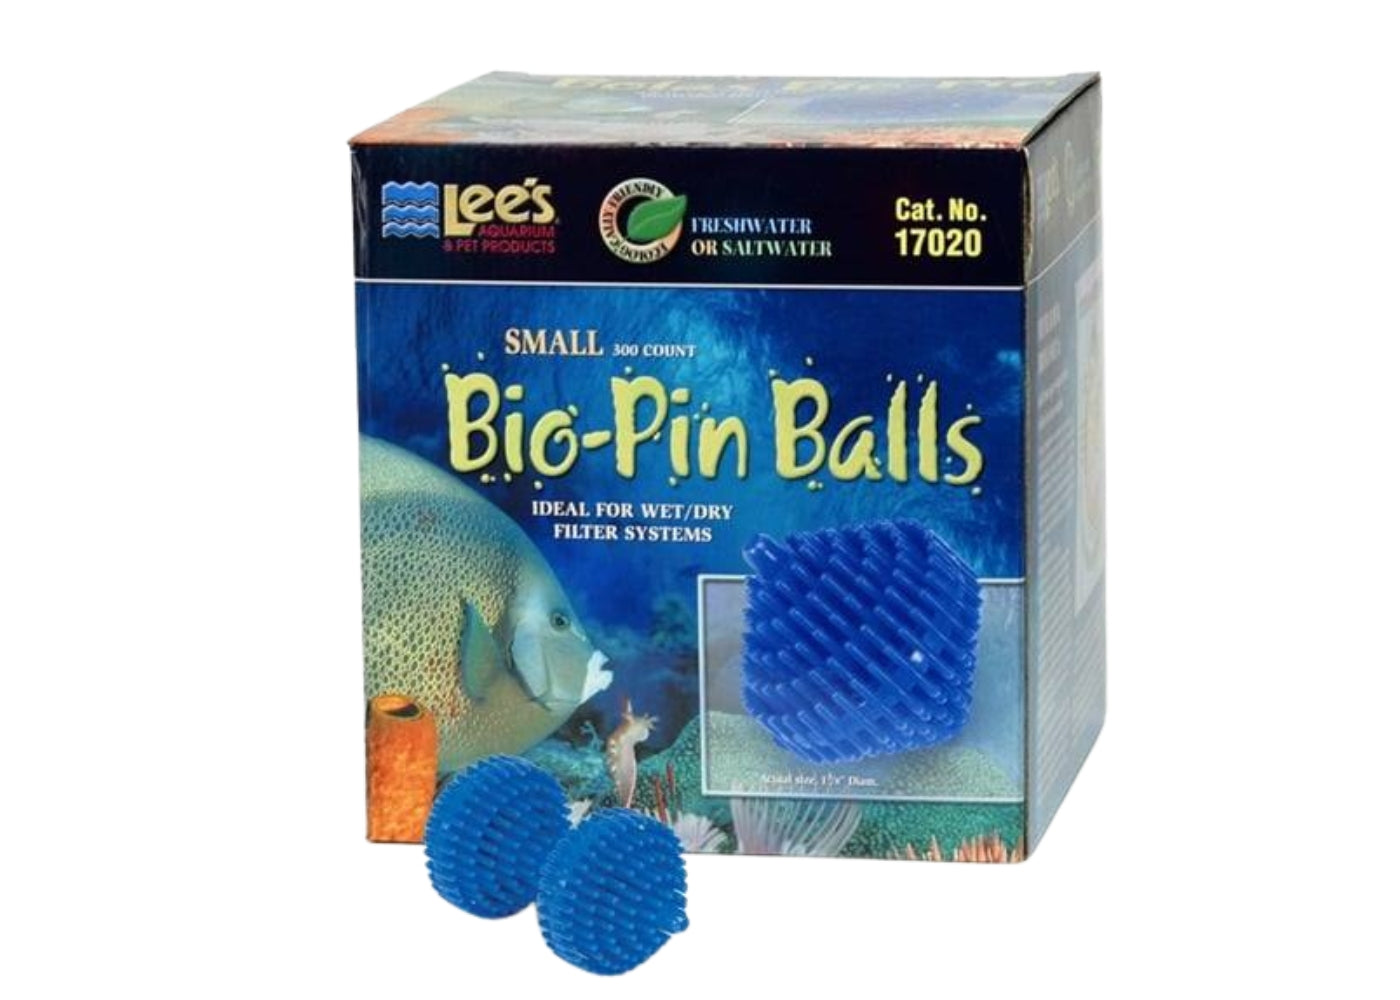 Coburg Aquarium | Lee's Bio-Pin Balls | Shop aquarium filter media online